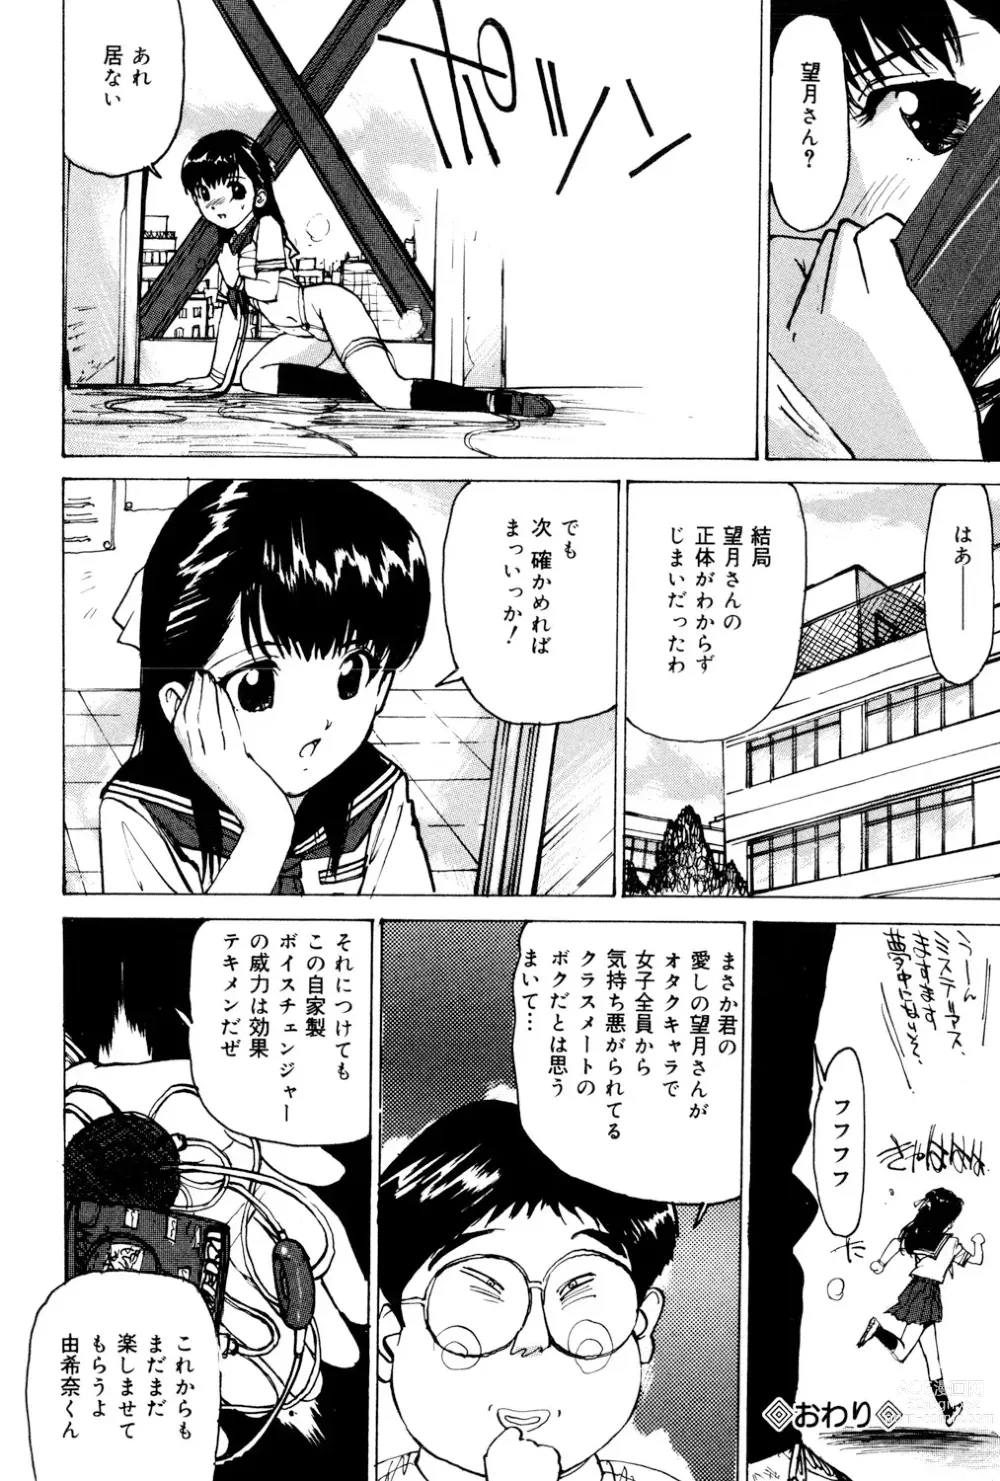 Page 19 of manga Joshikousei Gangu